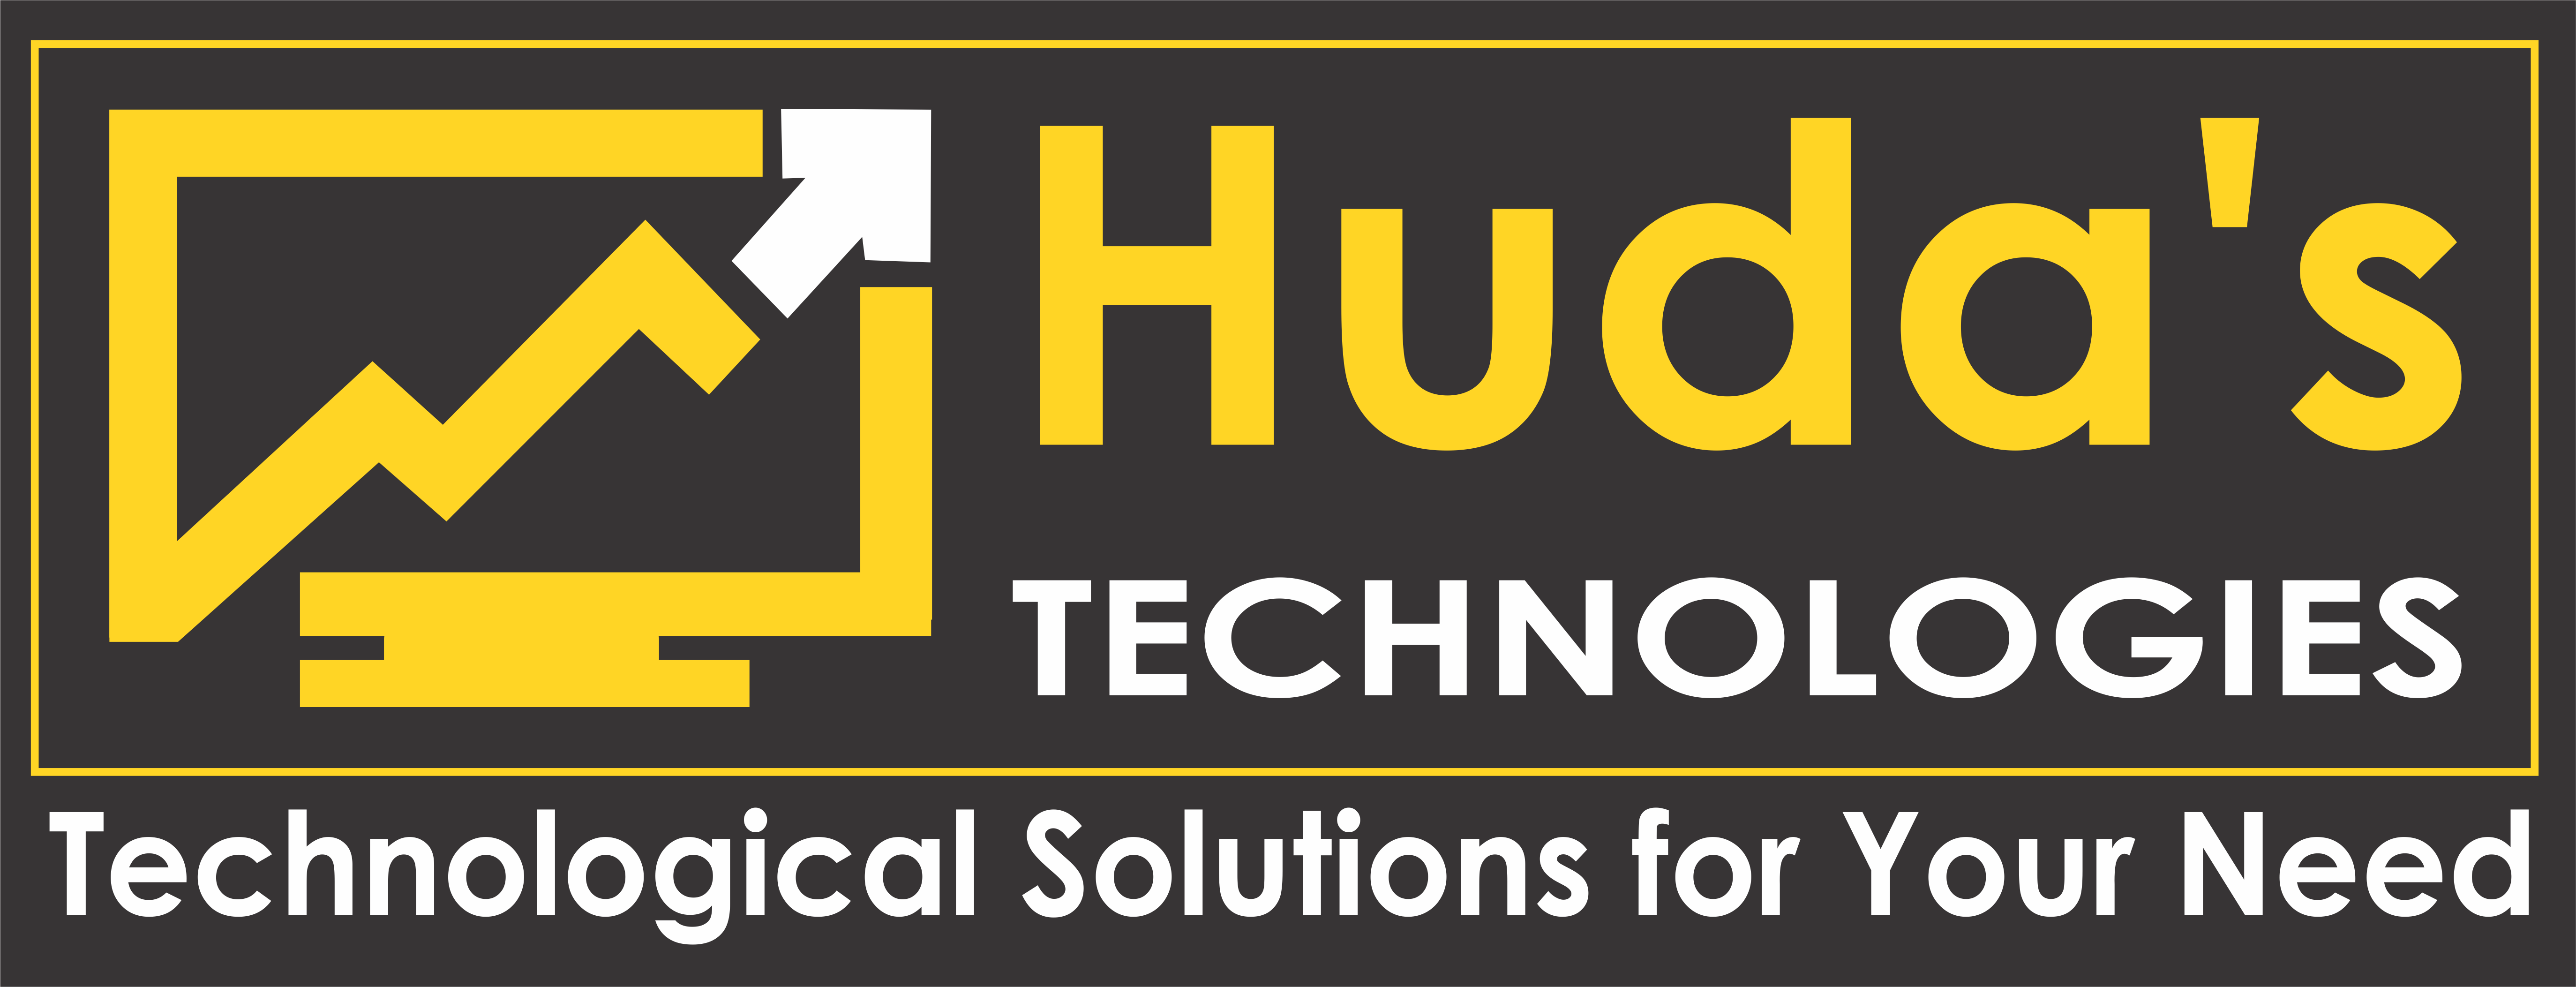 Huda's Technologies